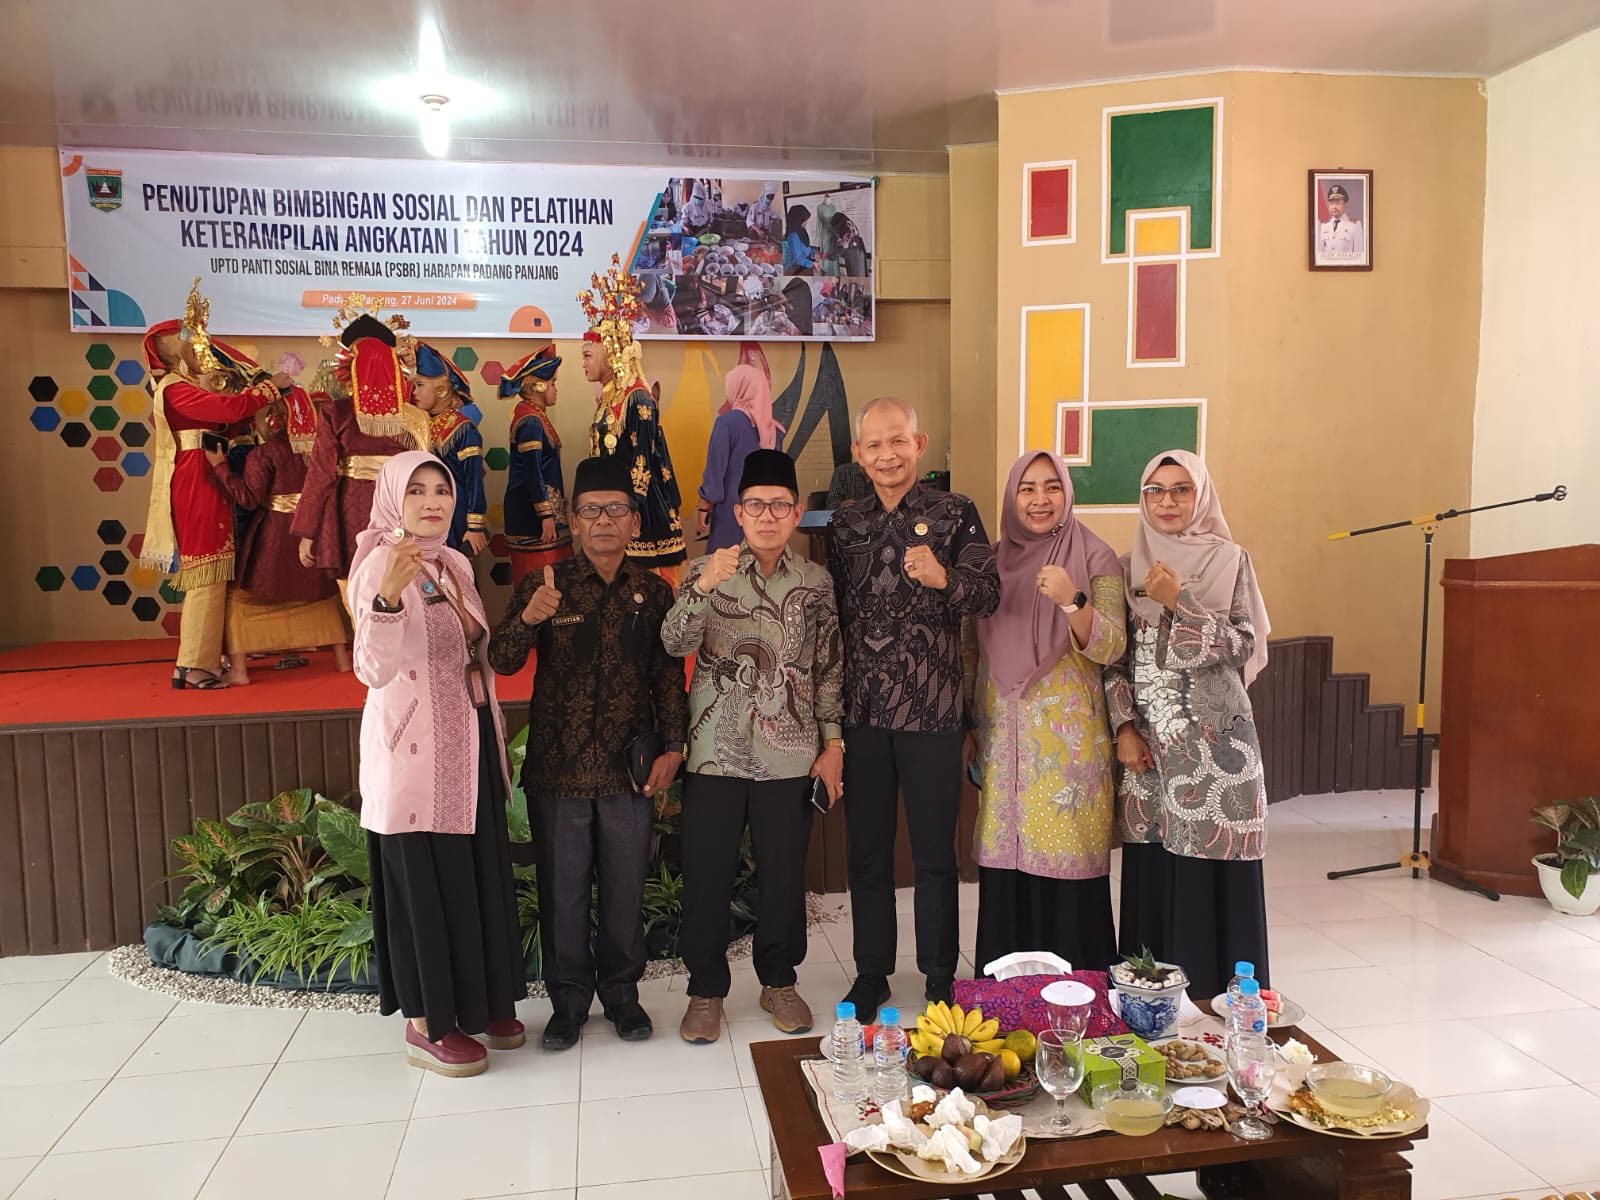 Dinas Sosial mengahdiri Penutupan bimbingan sosial dan pelatihan keterampilan angkatan 1 Juni 2024 di UPT Panti Sosial Bina Remaja (PSBR) Harapan Padang Panjang